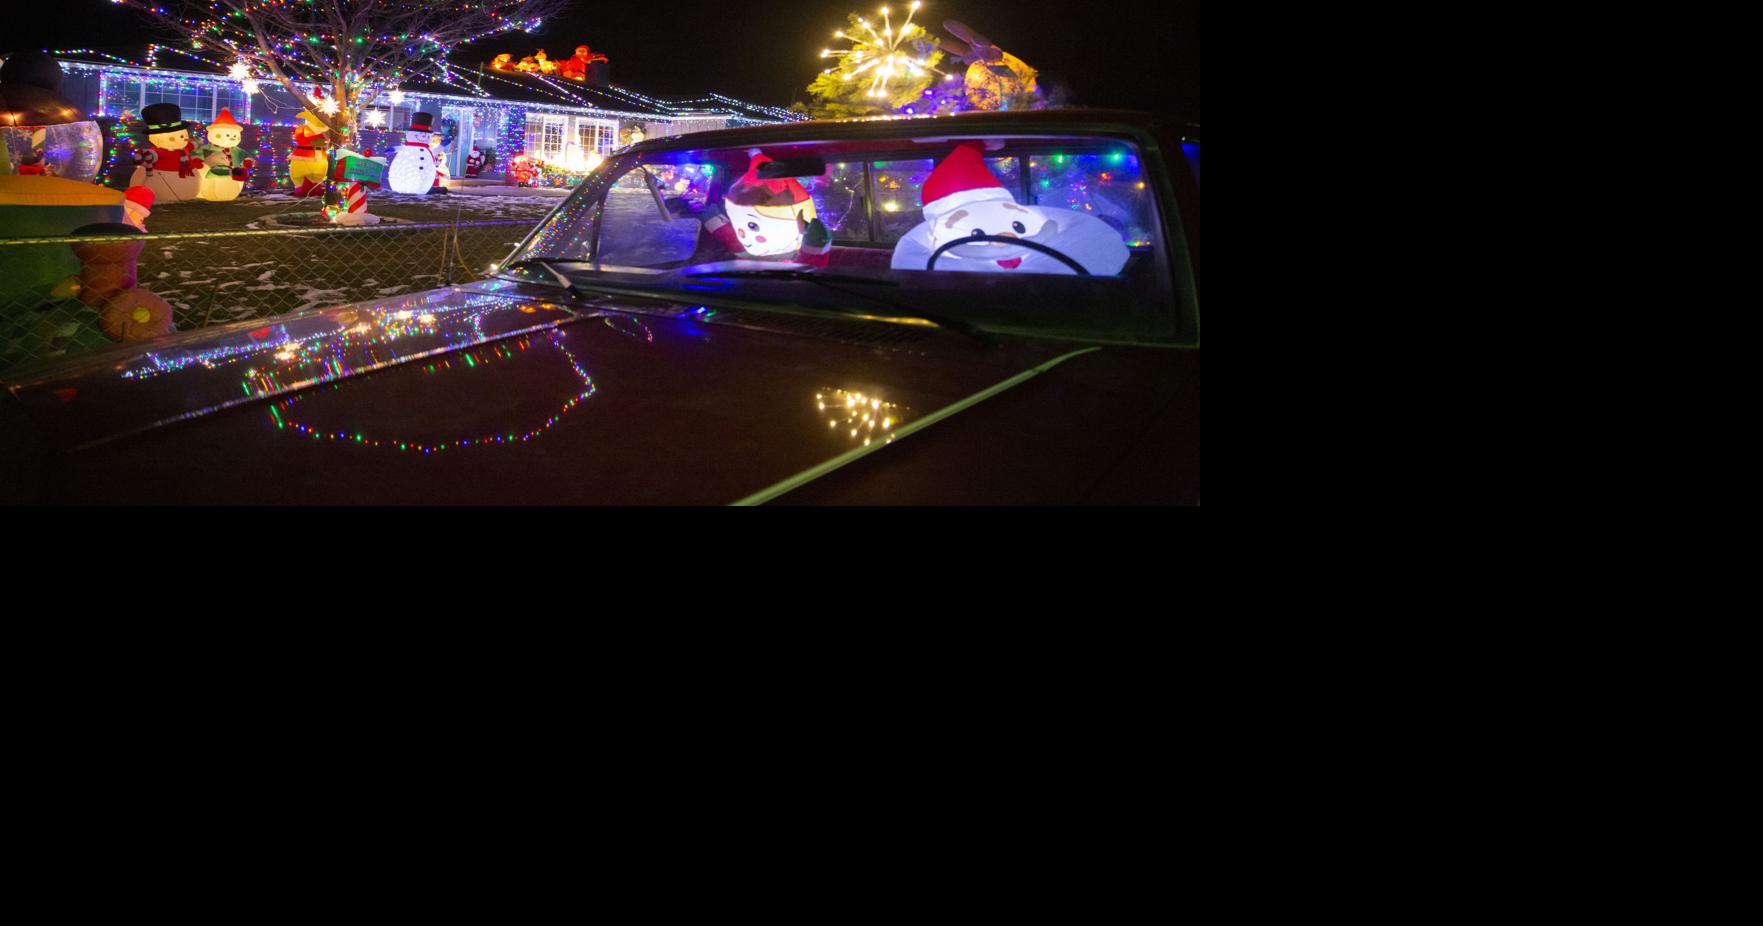 Christmas lights shine on Klamath Falls Gallery